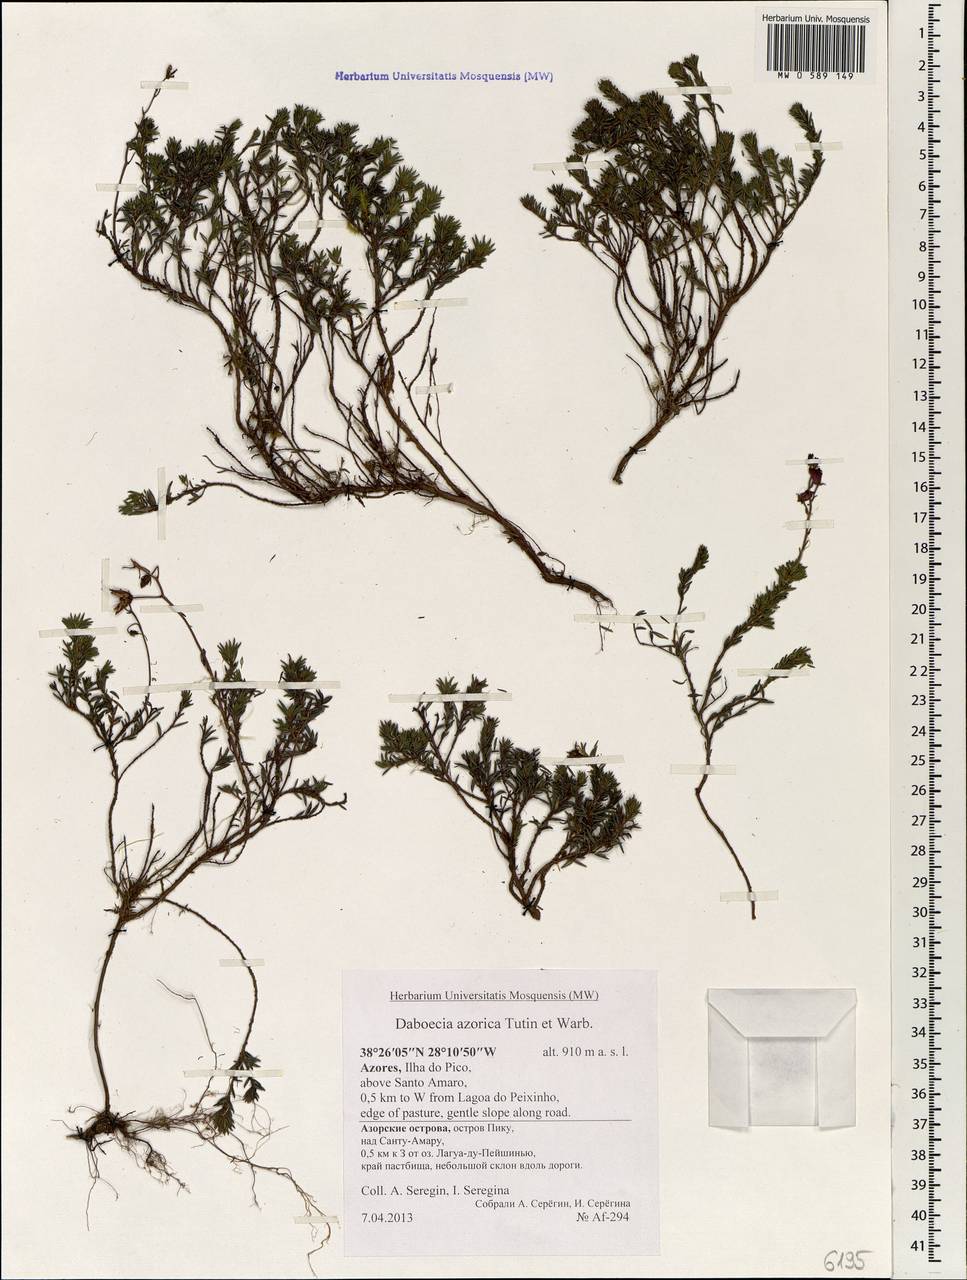 Daboecia cantabrica subsp. azorica (Tutin & E.F. Warburg) D. McClintock, Африка (AFR) (Португалия)